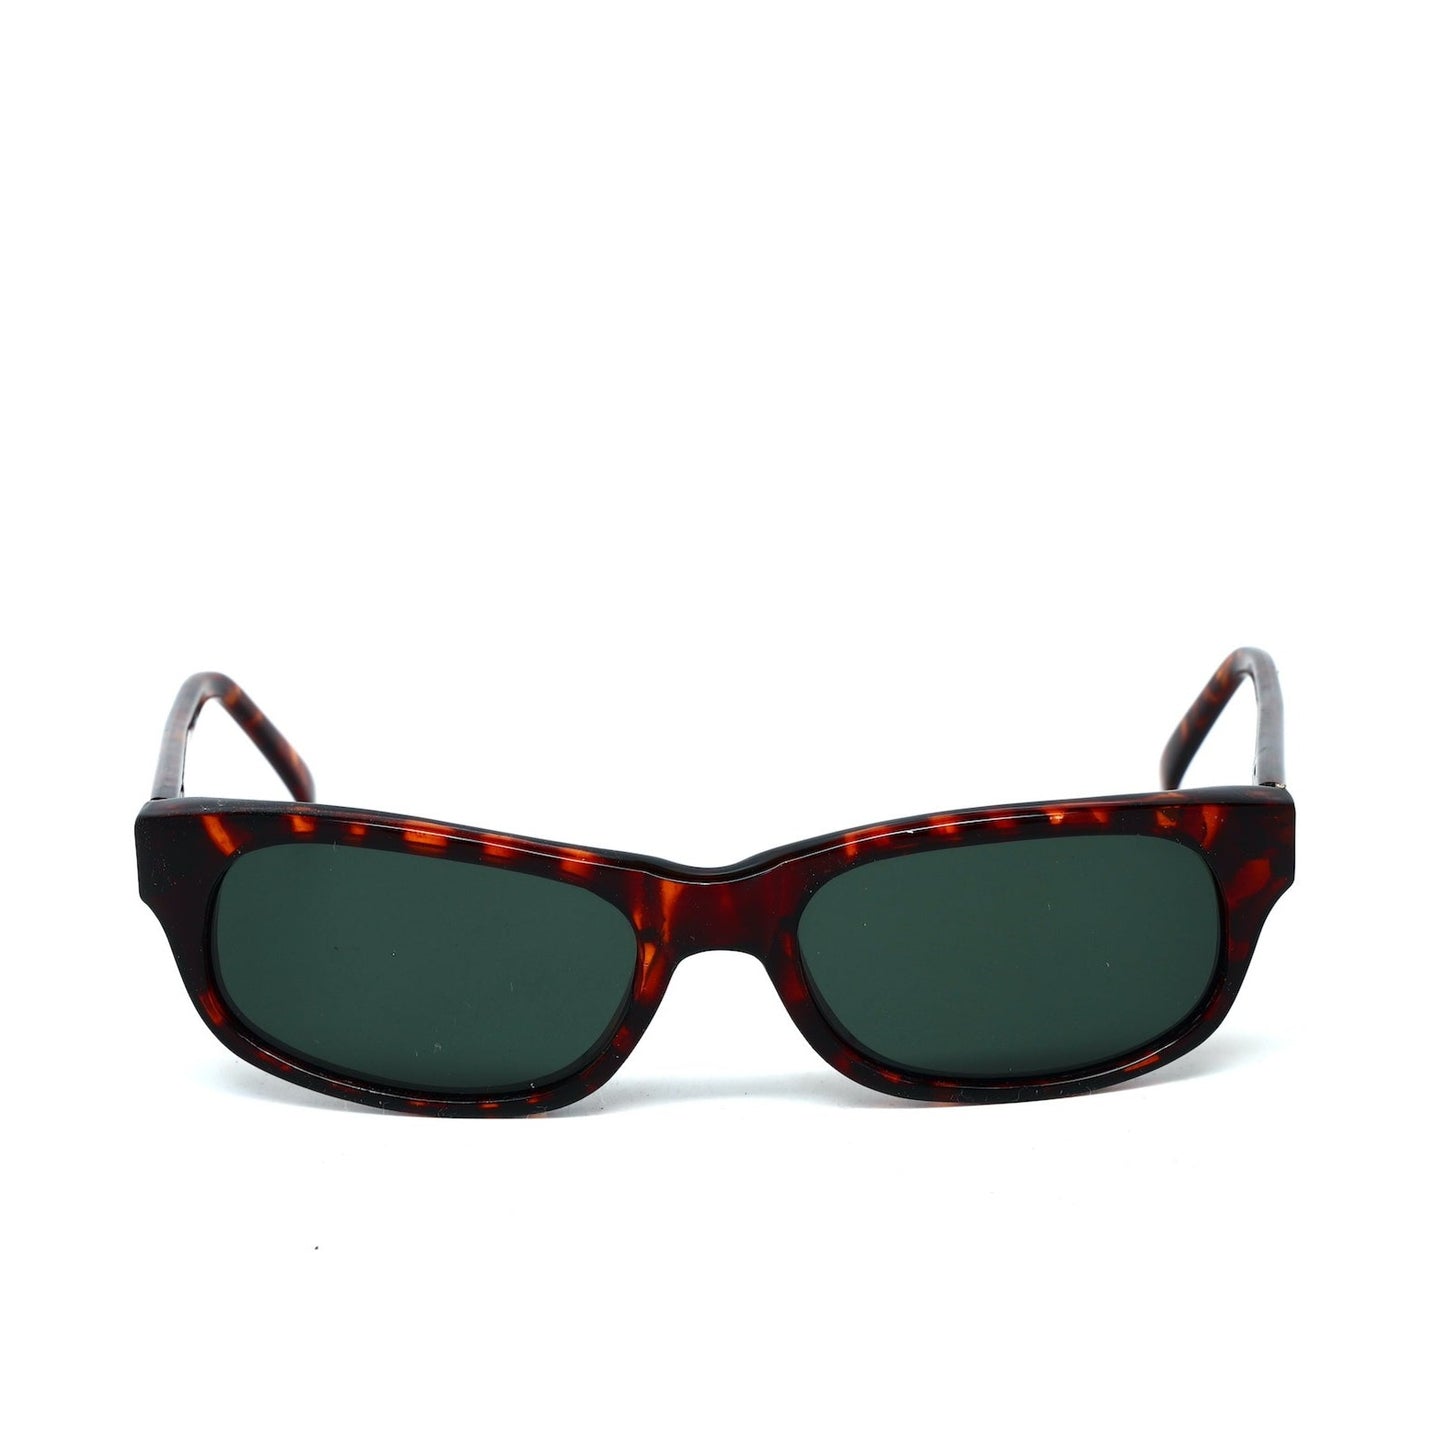 Vintage Small Size Rectangle Frame Slim Narrow Sunglasses - Tortoise